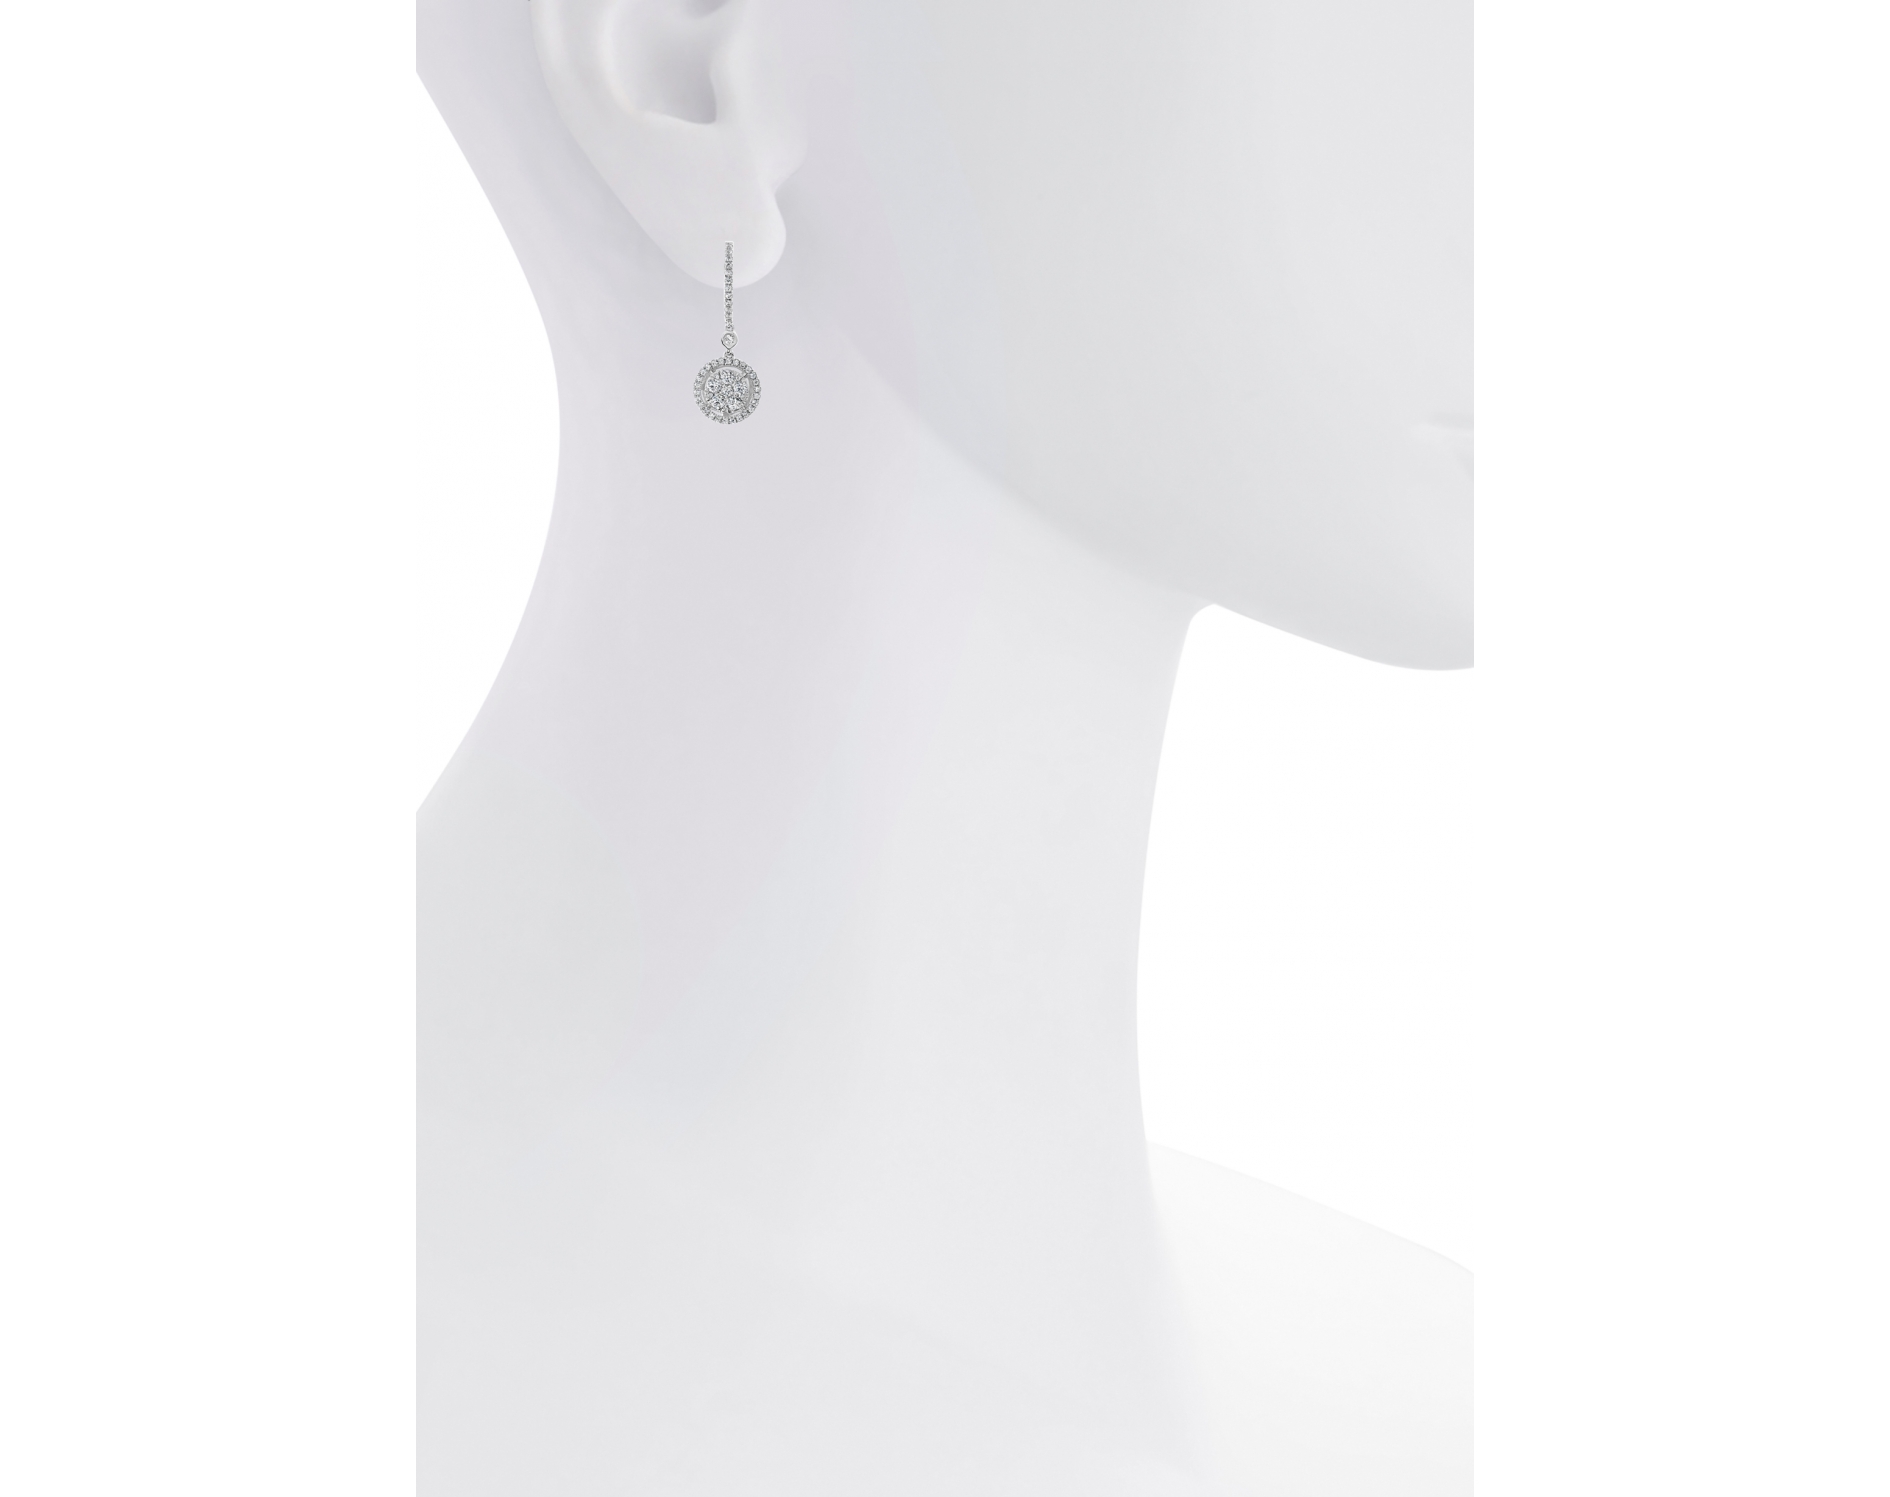 18k white gold halo illusion set diamond earrings with upstones